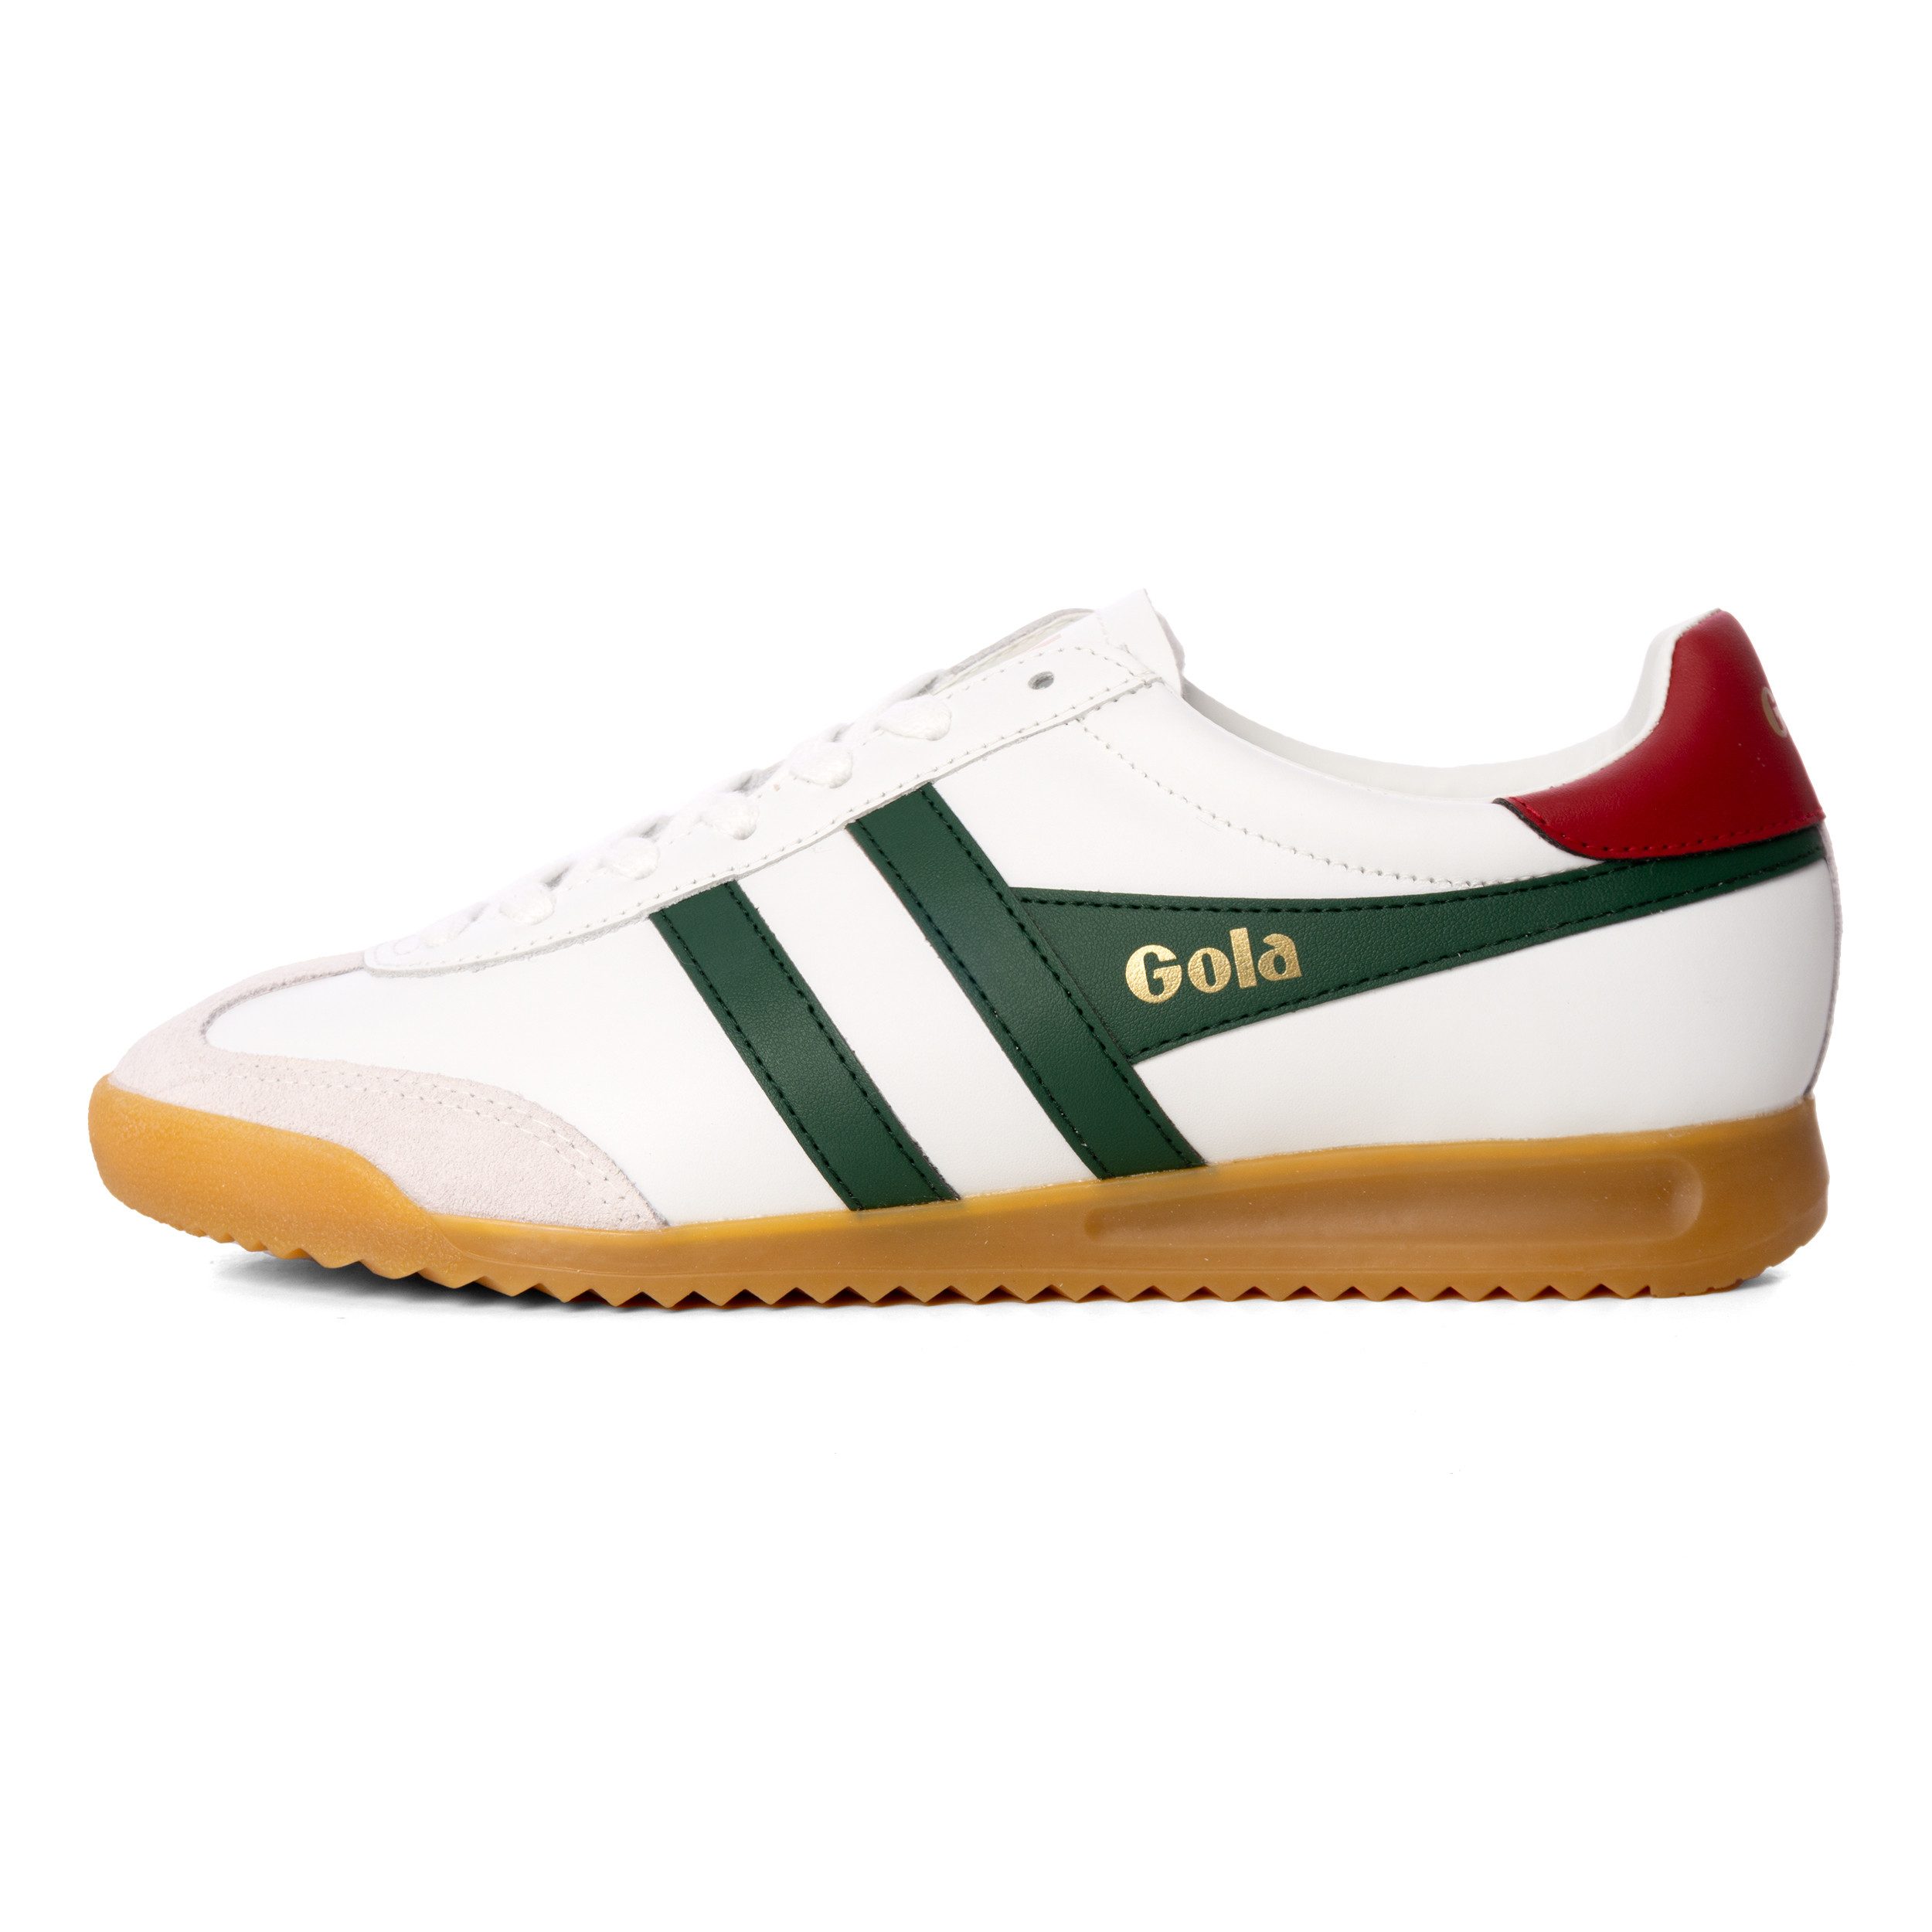 Gola Schuhe Gola Torpedo Leather, G 43, F white/green/red Sneaker